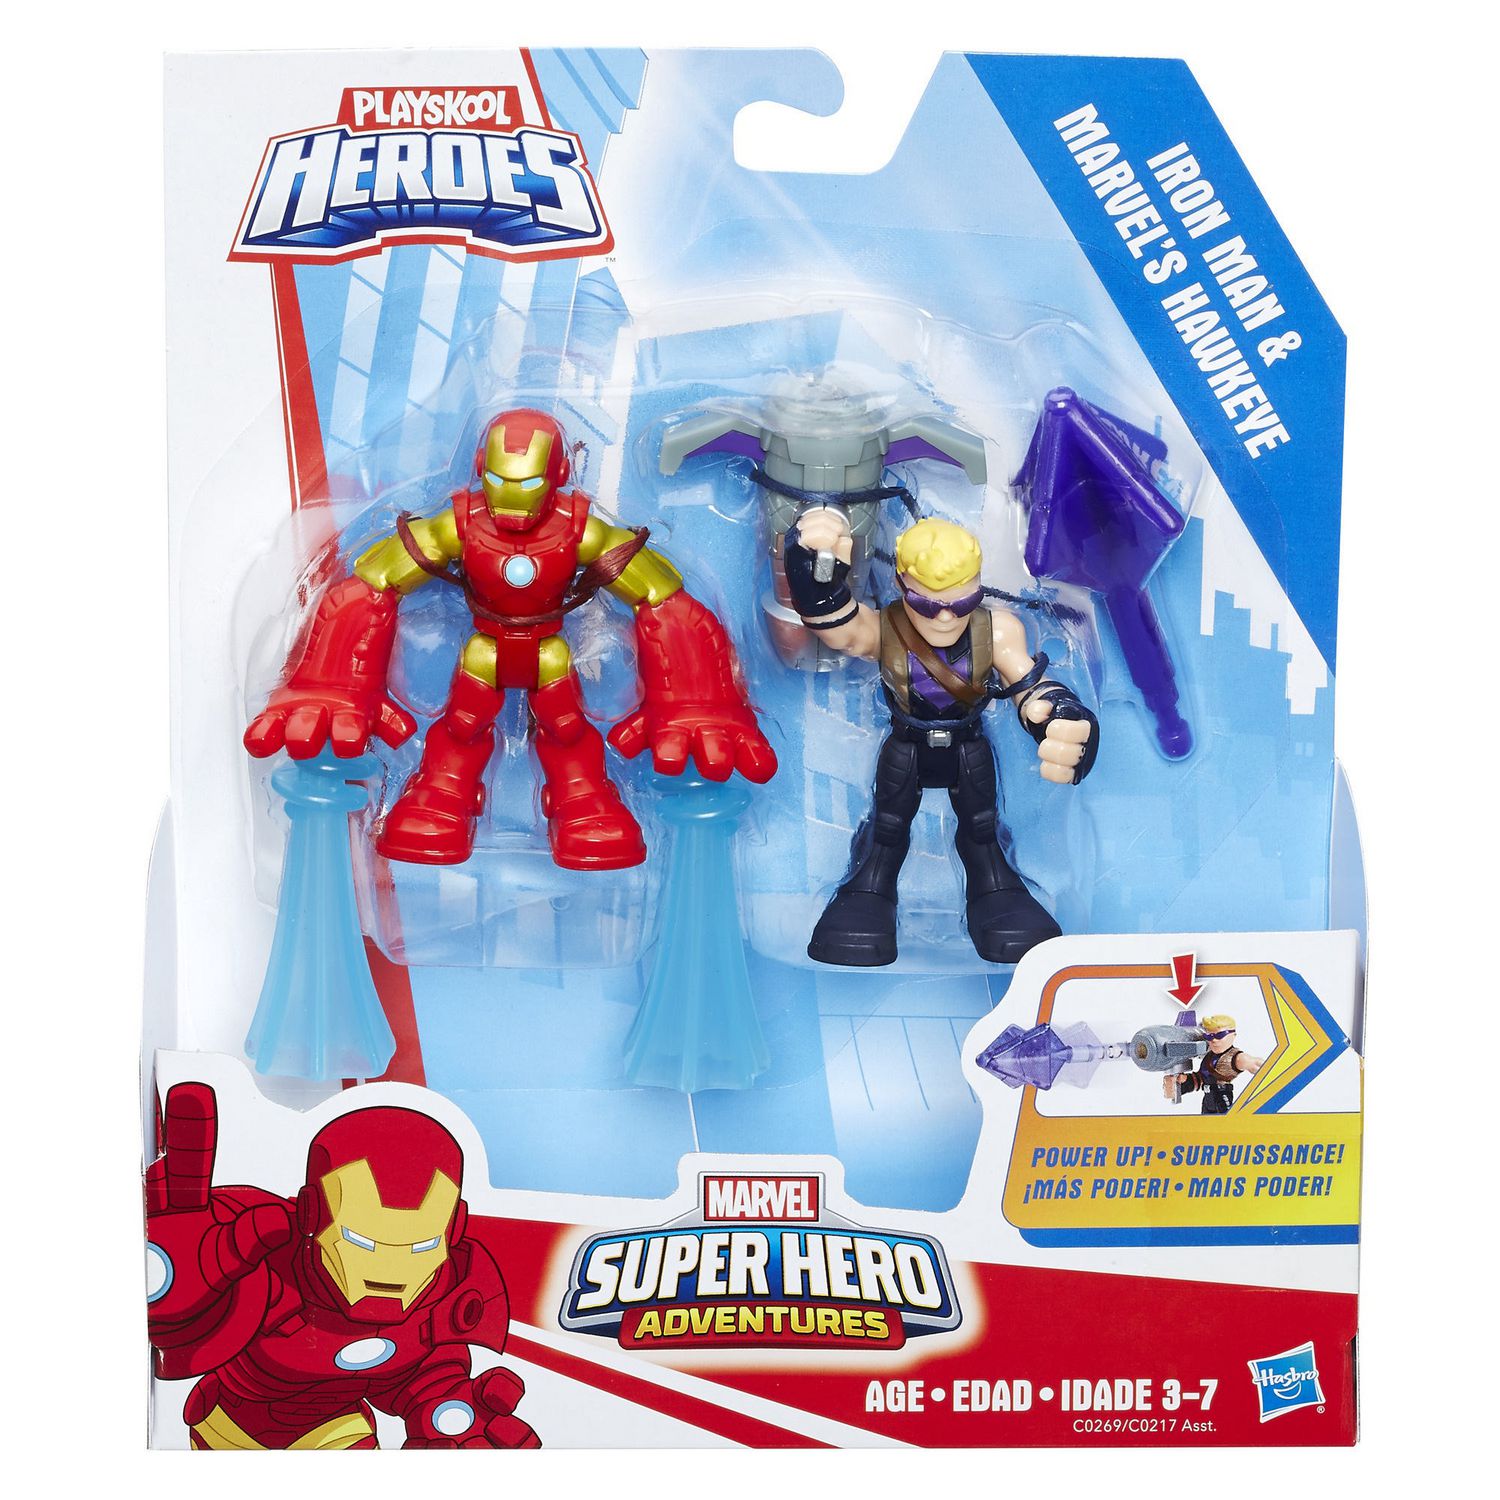 2pcs Playskool Marvel Super Hero Adventures Iron Man Tony Stark /& Spiderman